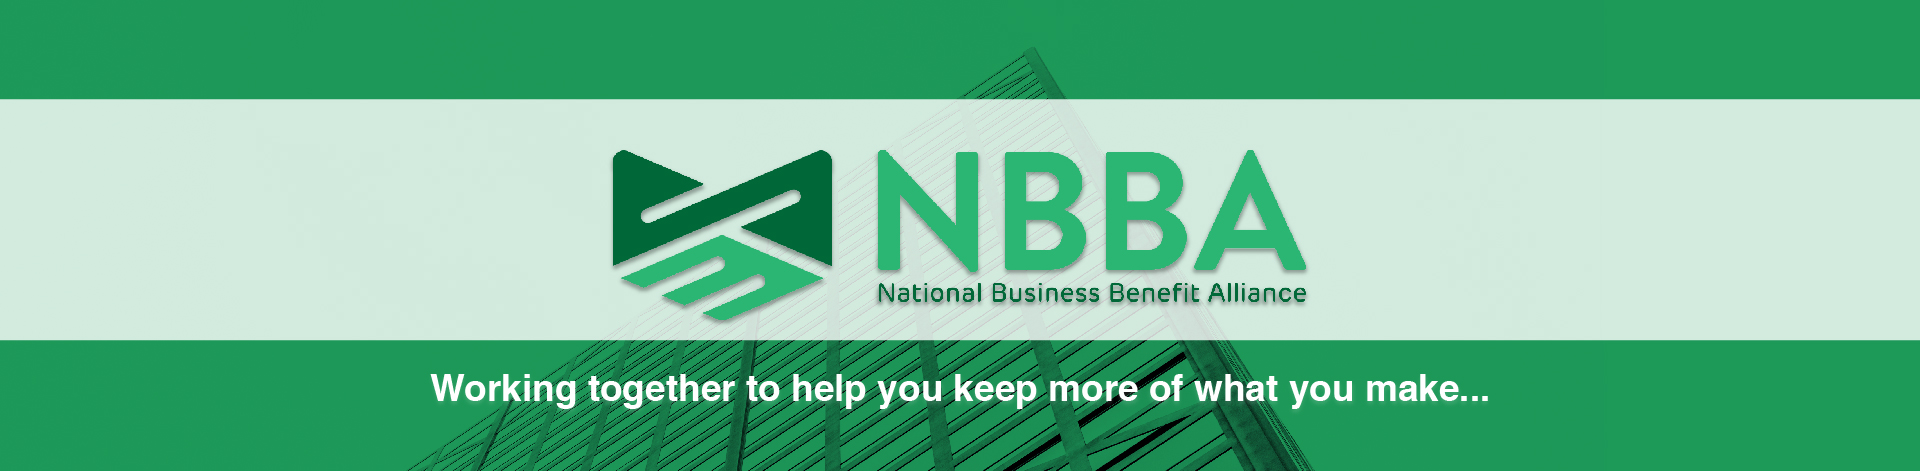 NBBA banner